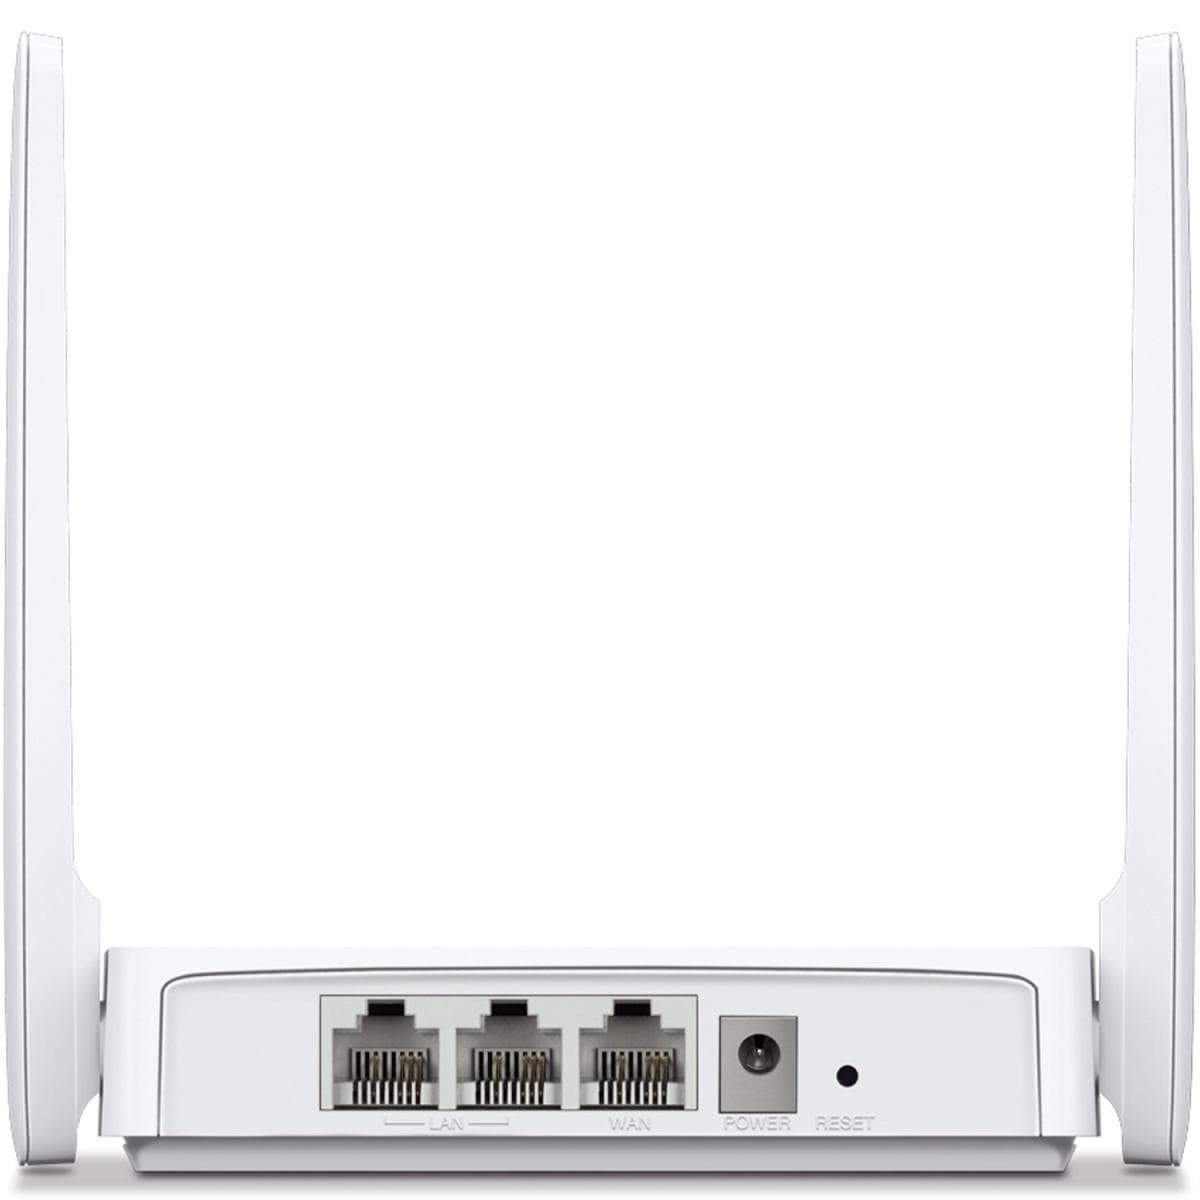 MERCUSYS Routers Mercusys MW302R 300Mbps Wireless WiFi Router Two 5dBi Antennas IPv6 Multi-Mode